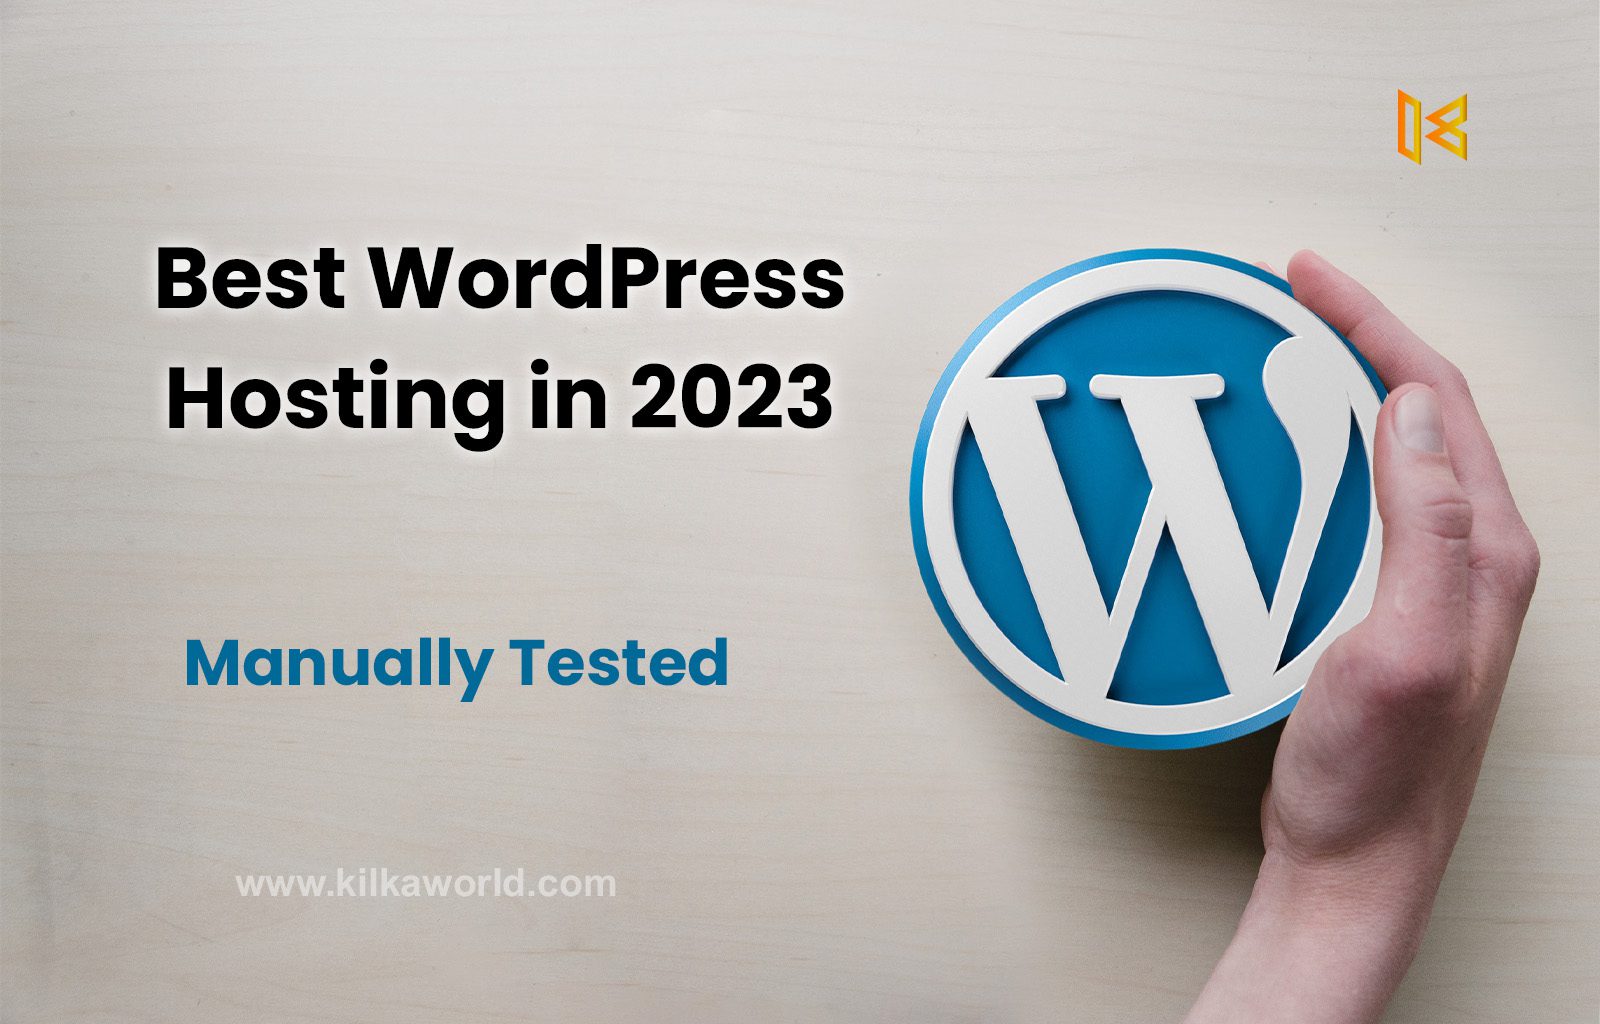 Best WordPress Hosting in 2023 kilka world